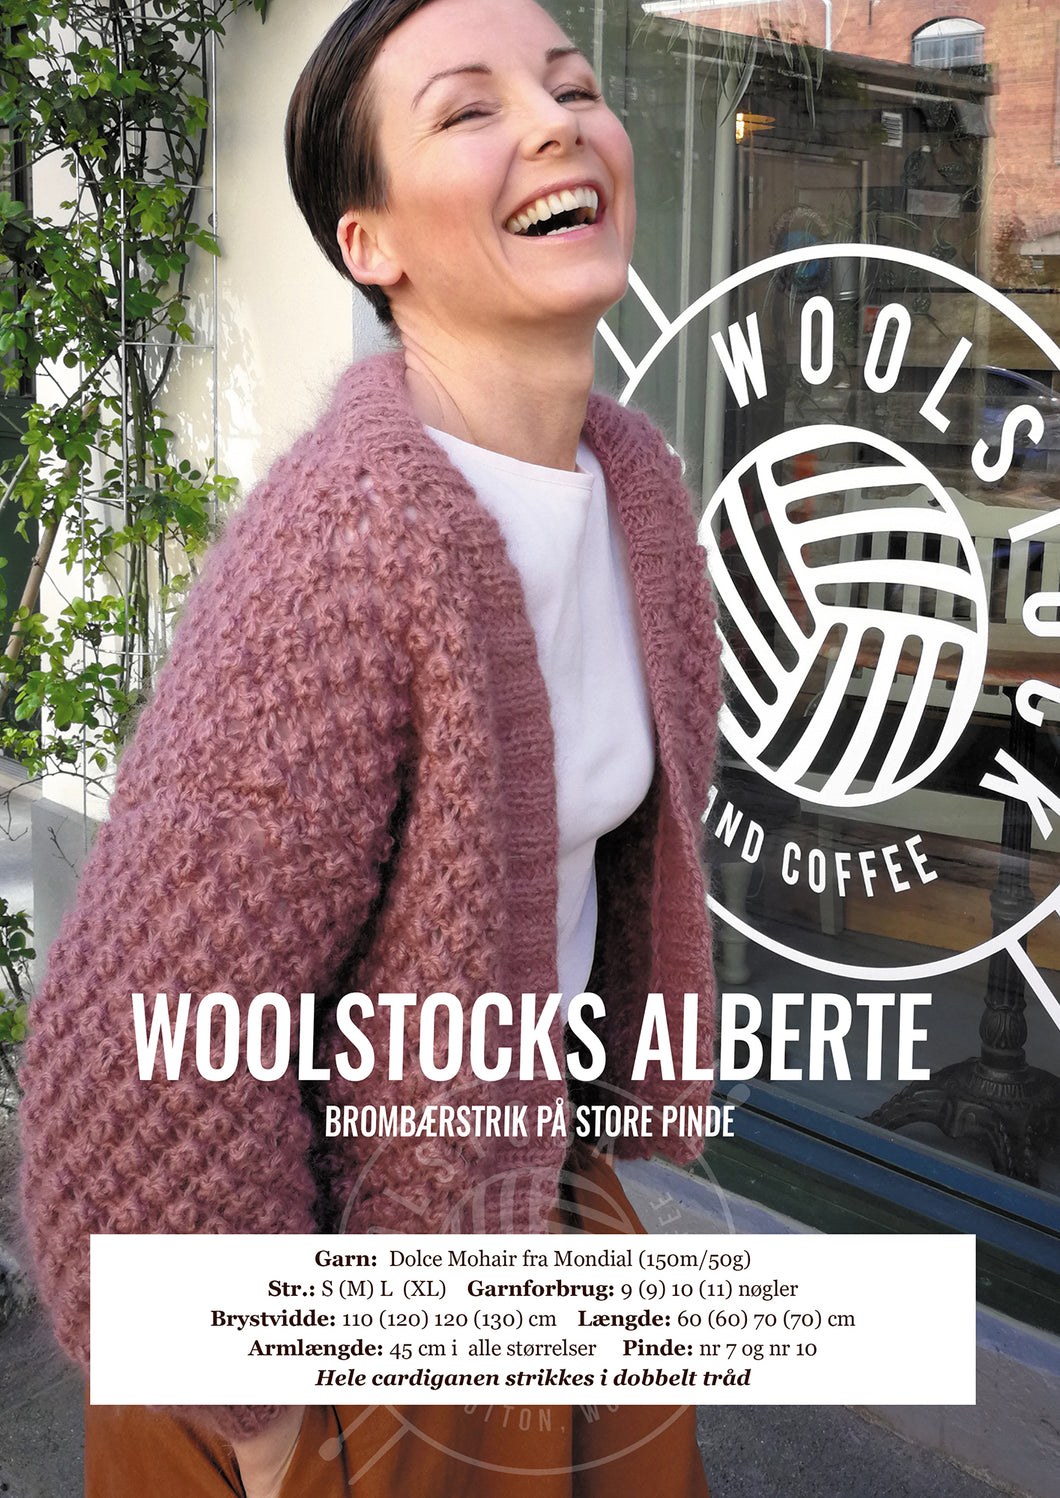 Woolstocks Alberte